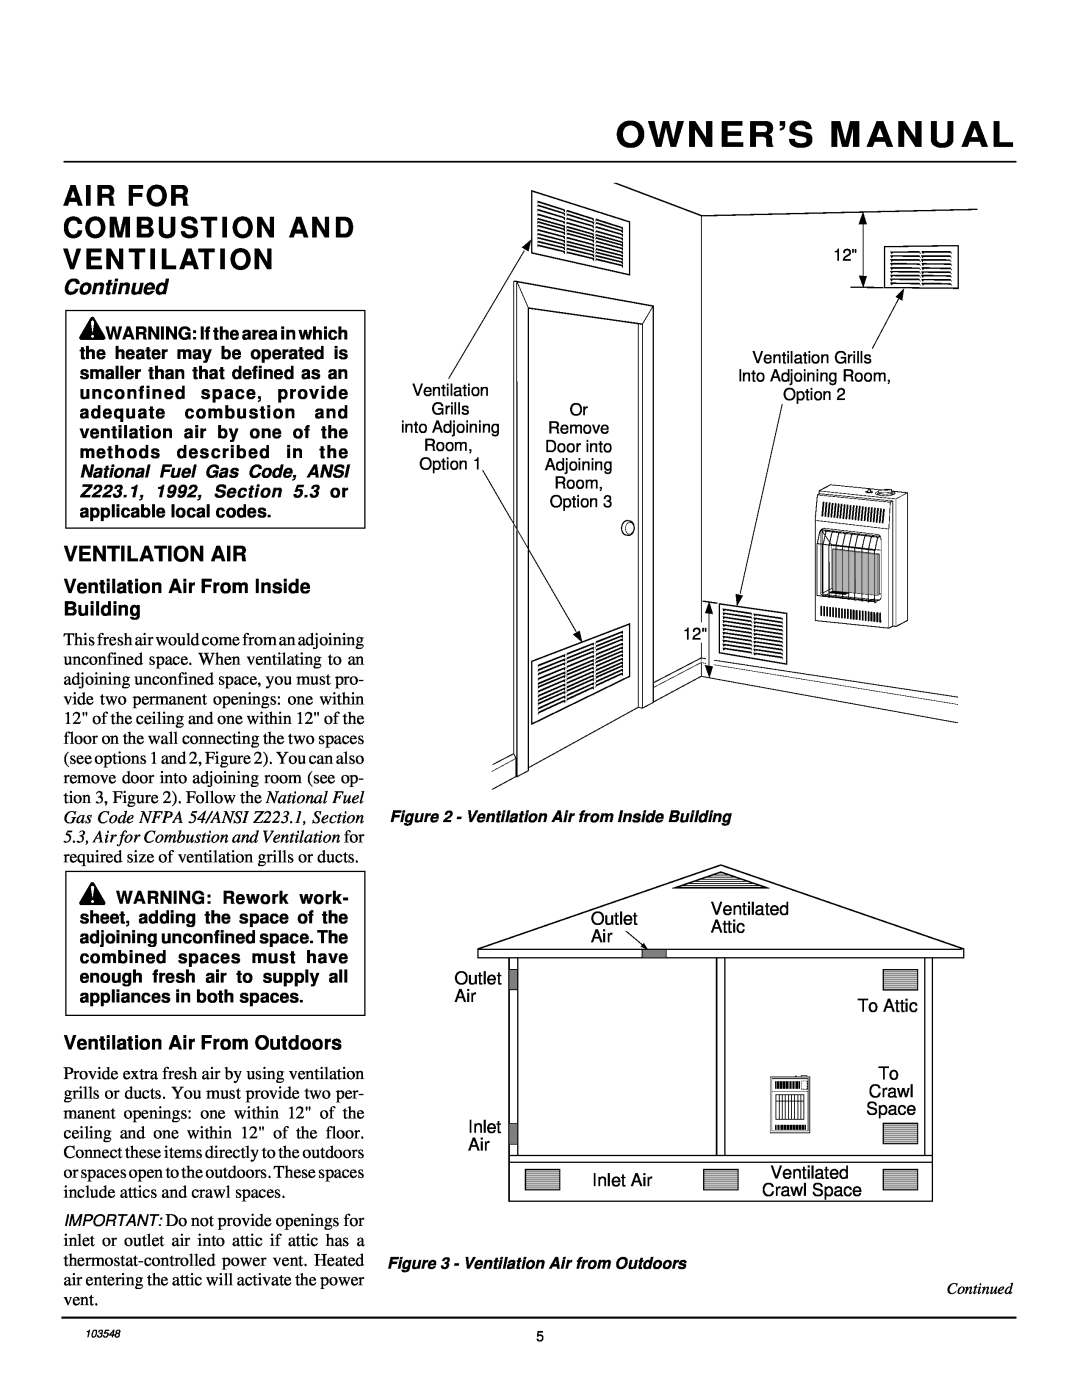 Desa CGP10RL installation manual Air For Combustion And Ventilation, Continued, Ventilation Air From Inside Building 